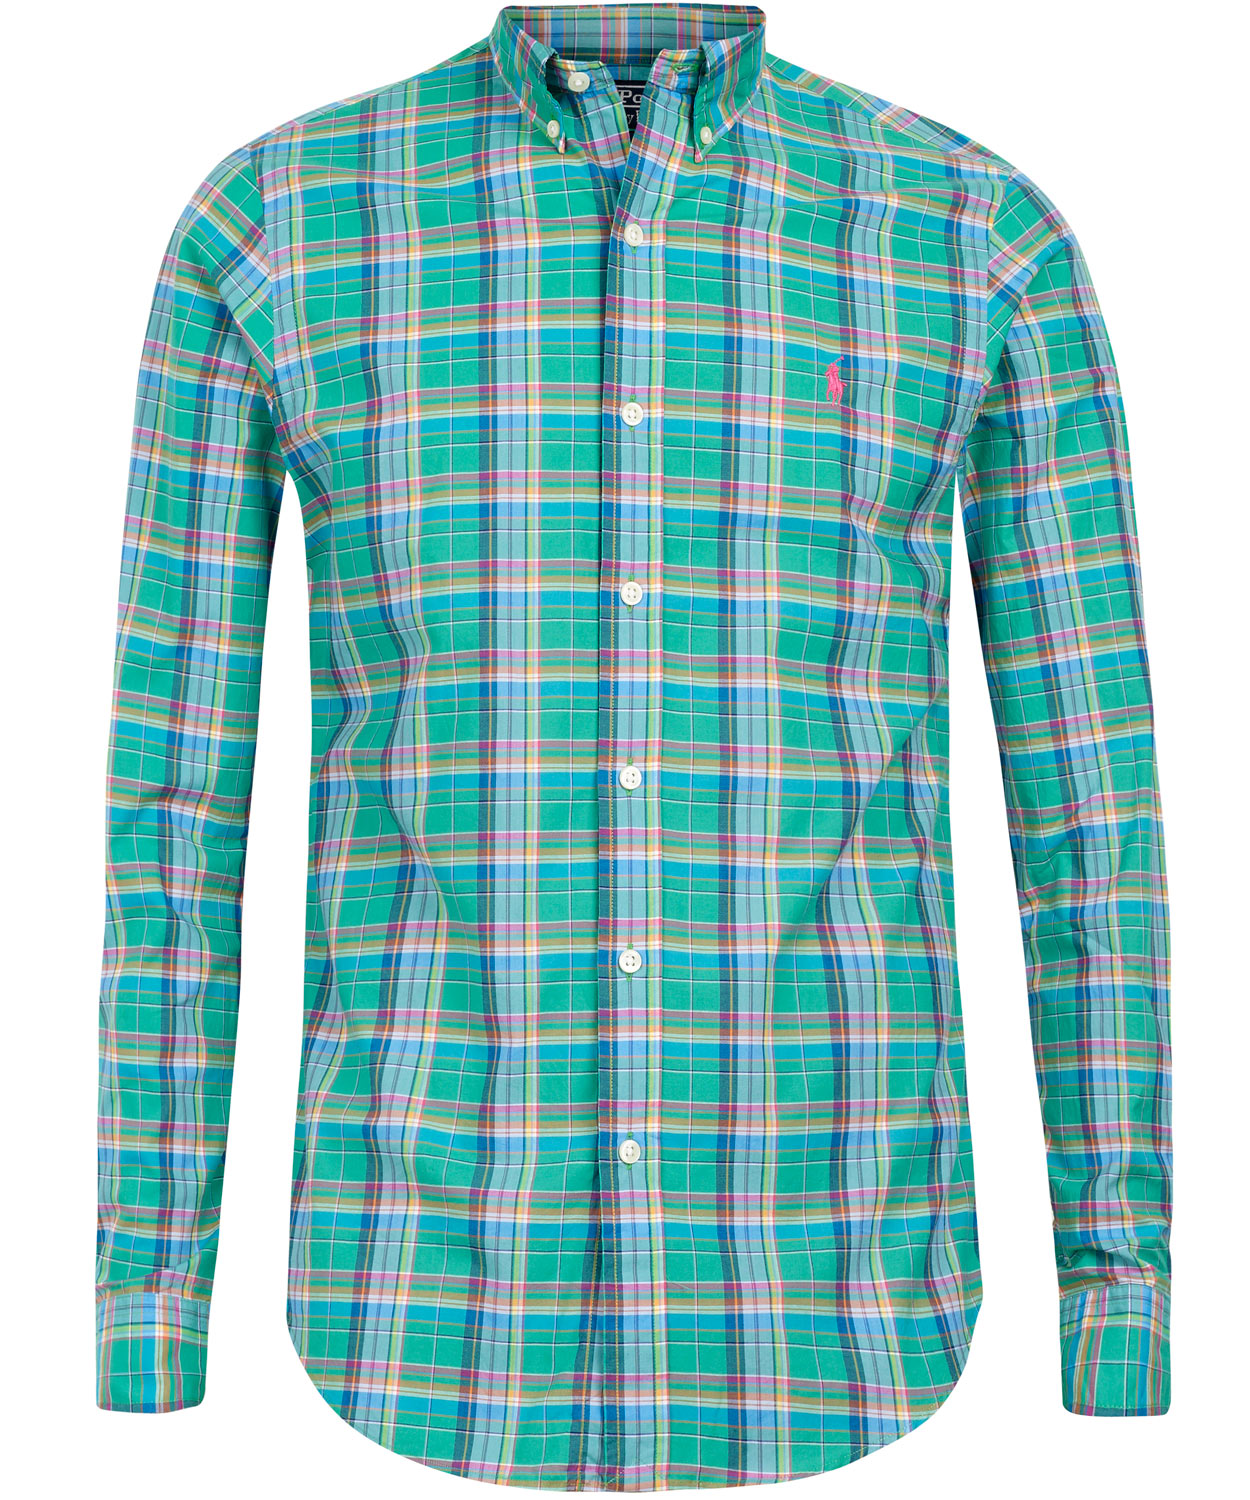 Lyst - Polo Ralph Lauren Large Green Check Shirt in Green for Men